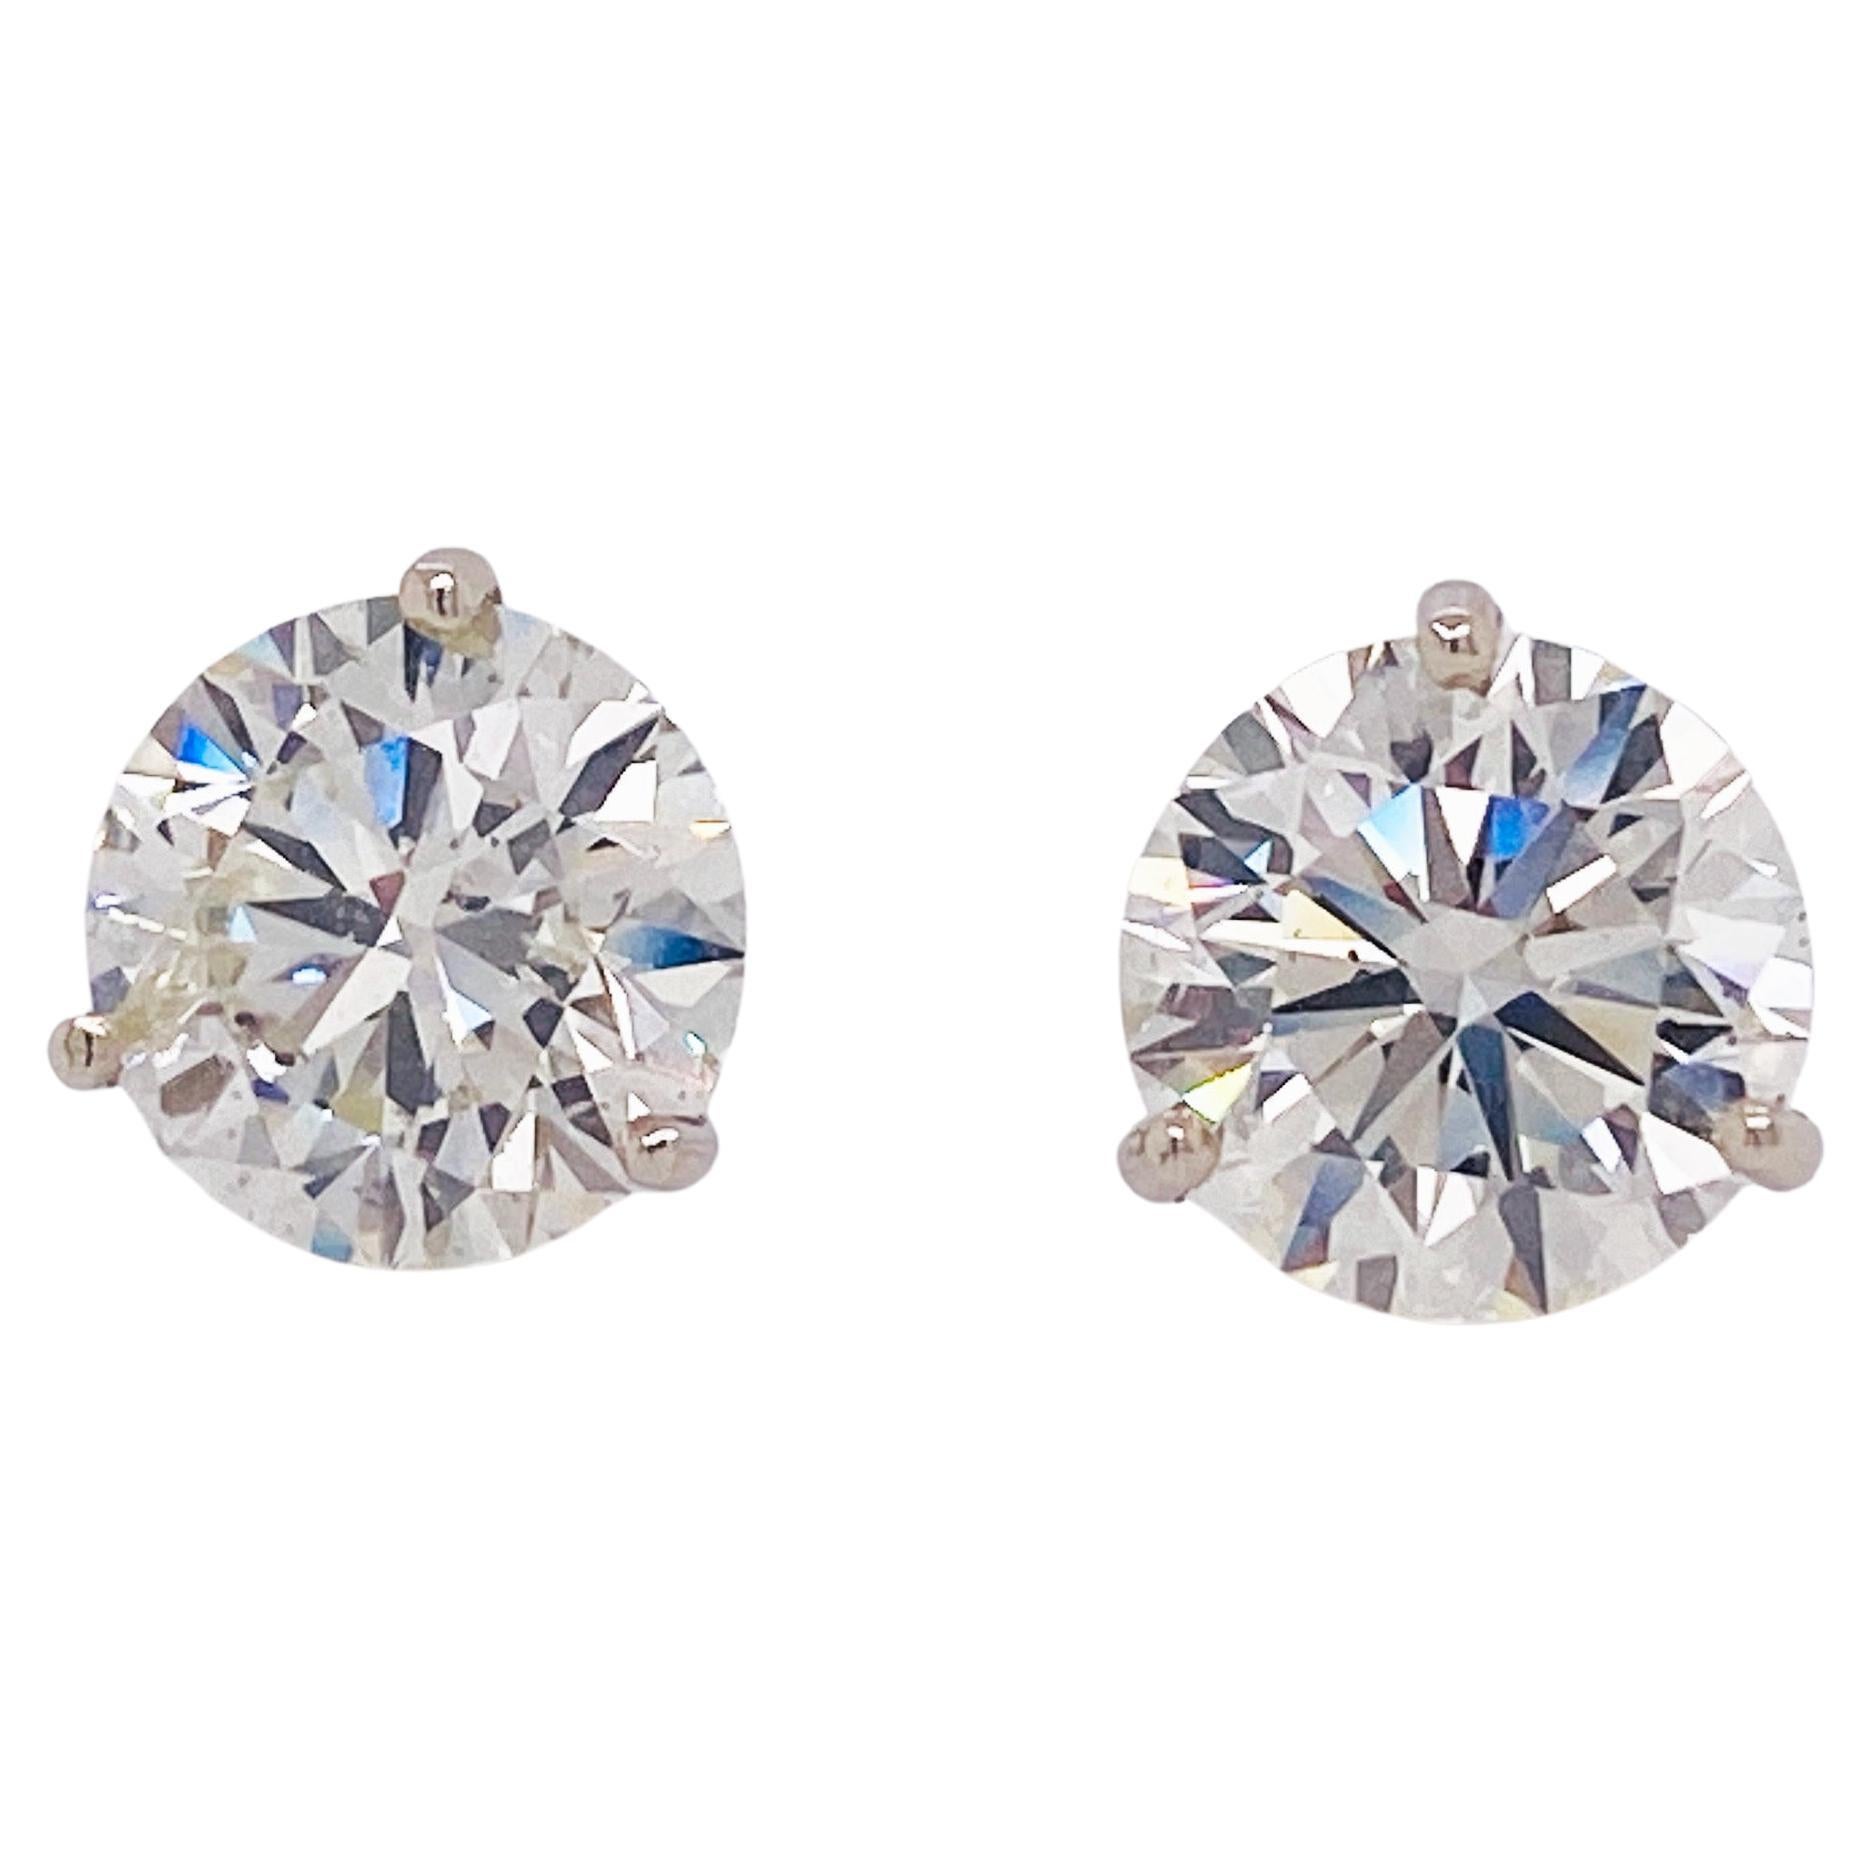 5.00 Carat Diamond Pair Martini Stud Earrings in 14K Gold Lv For Sale